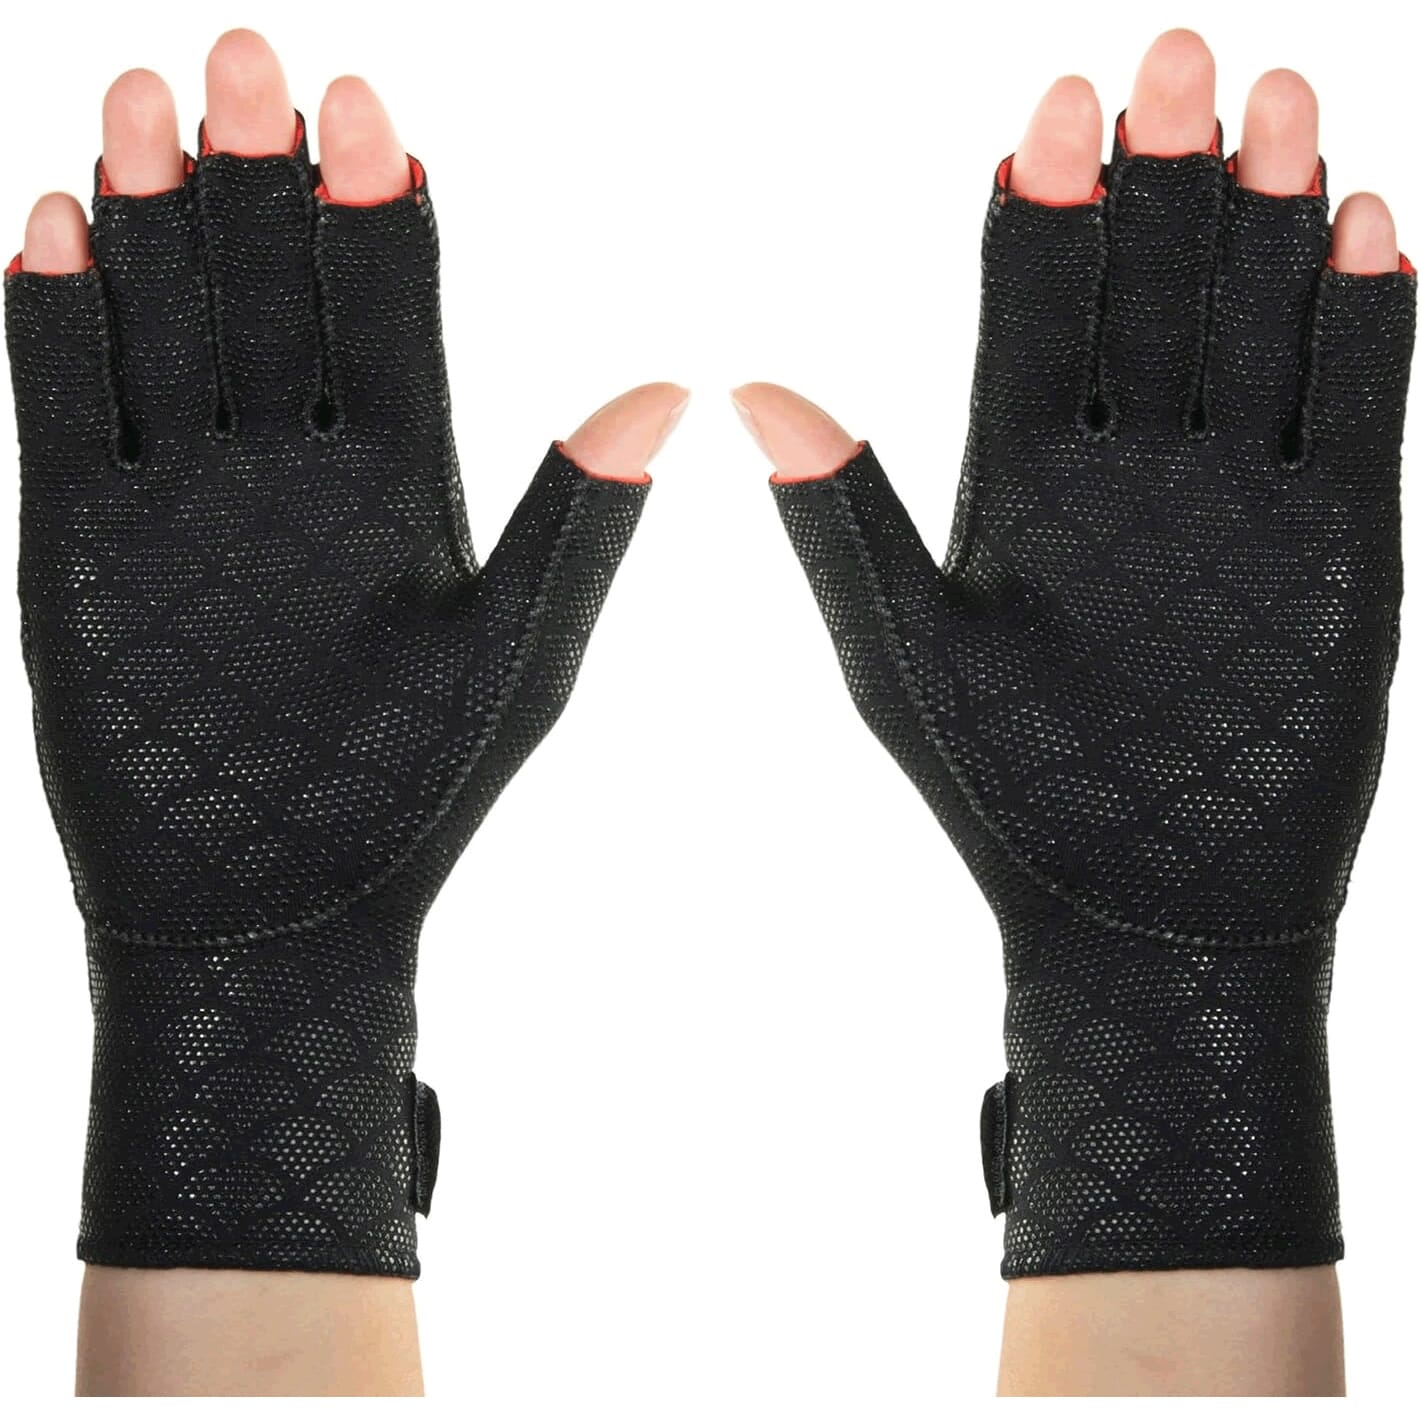 View Arthritic Gloves Medium 2123cm information